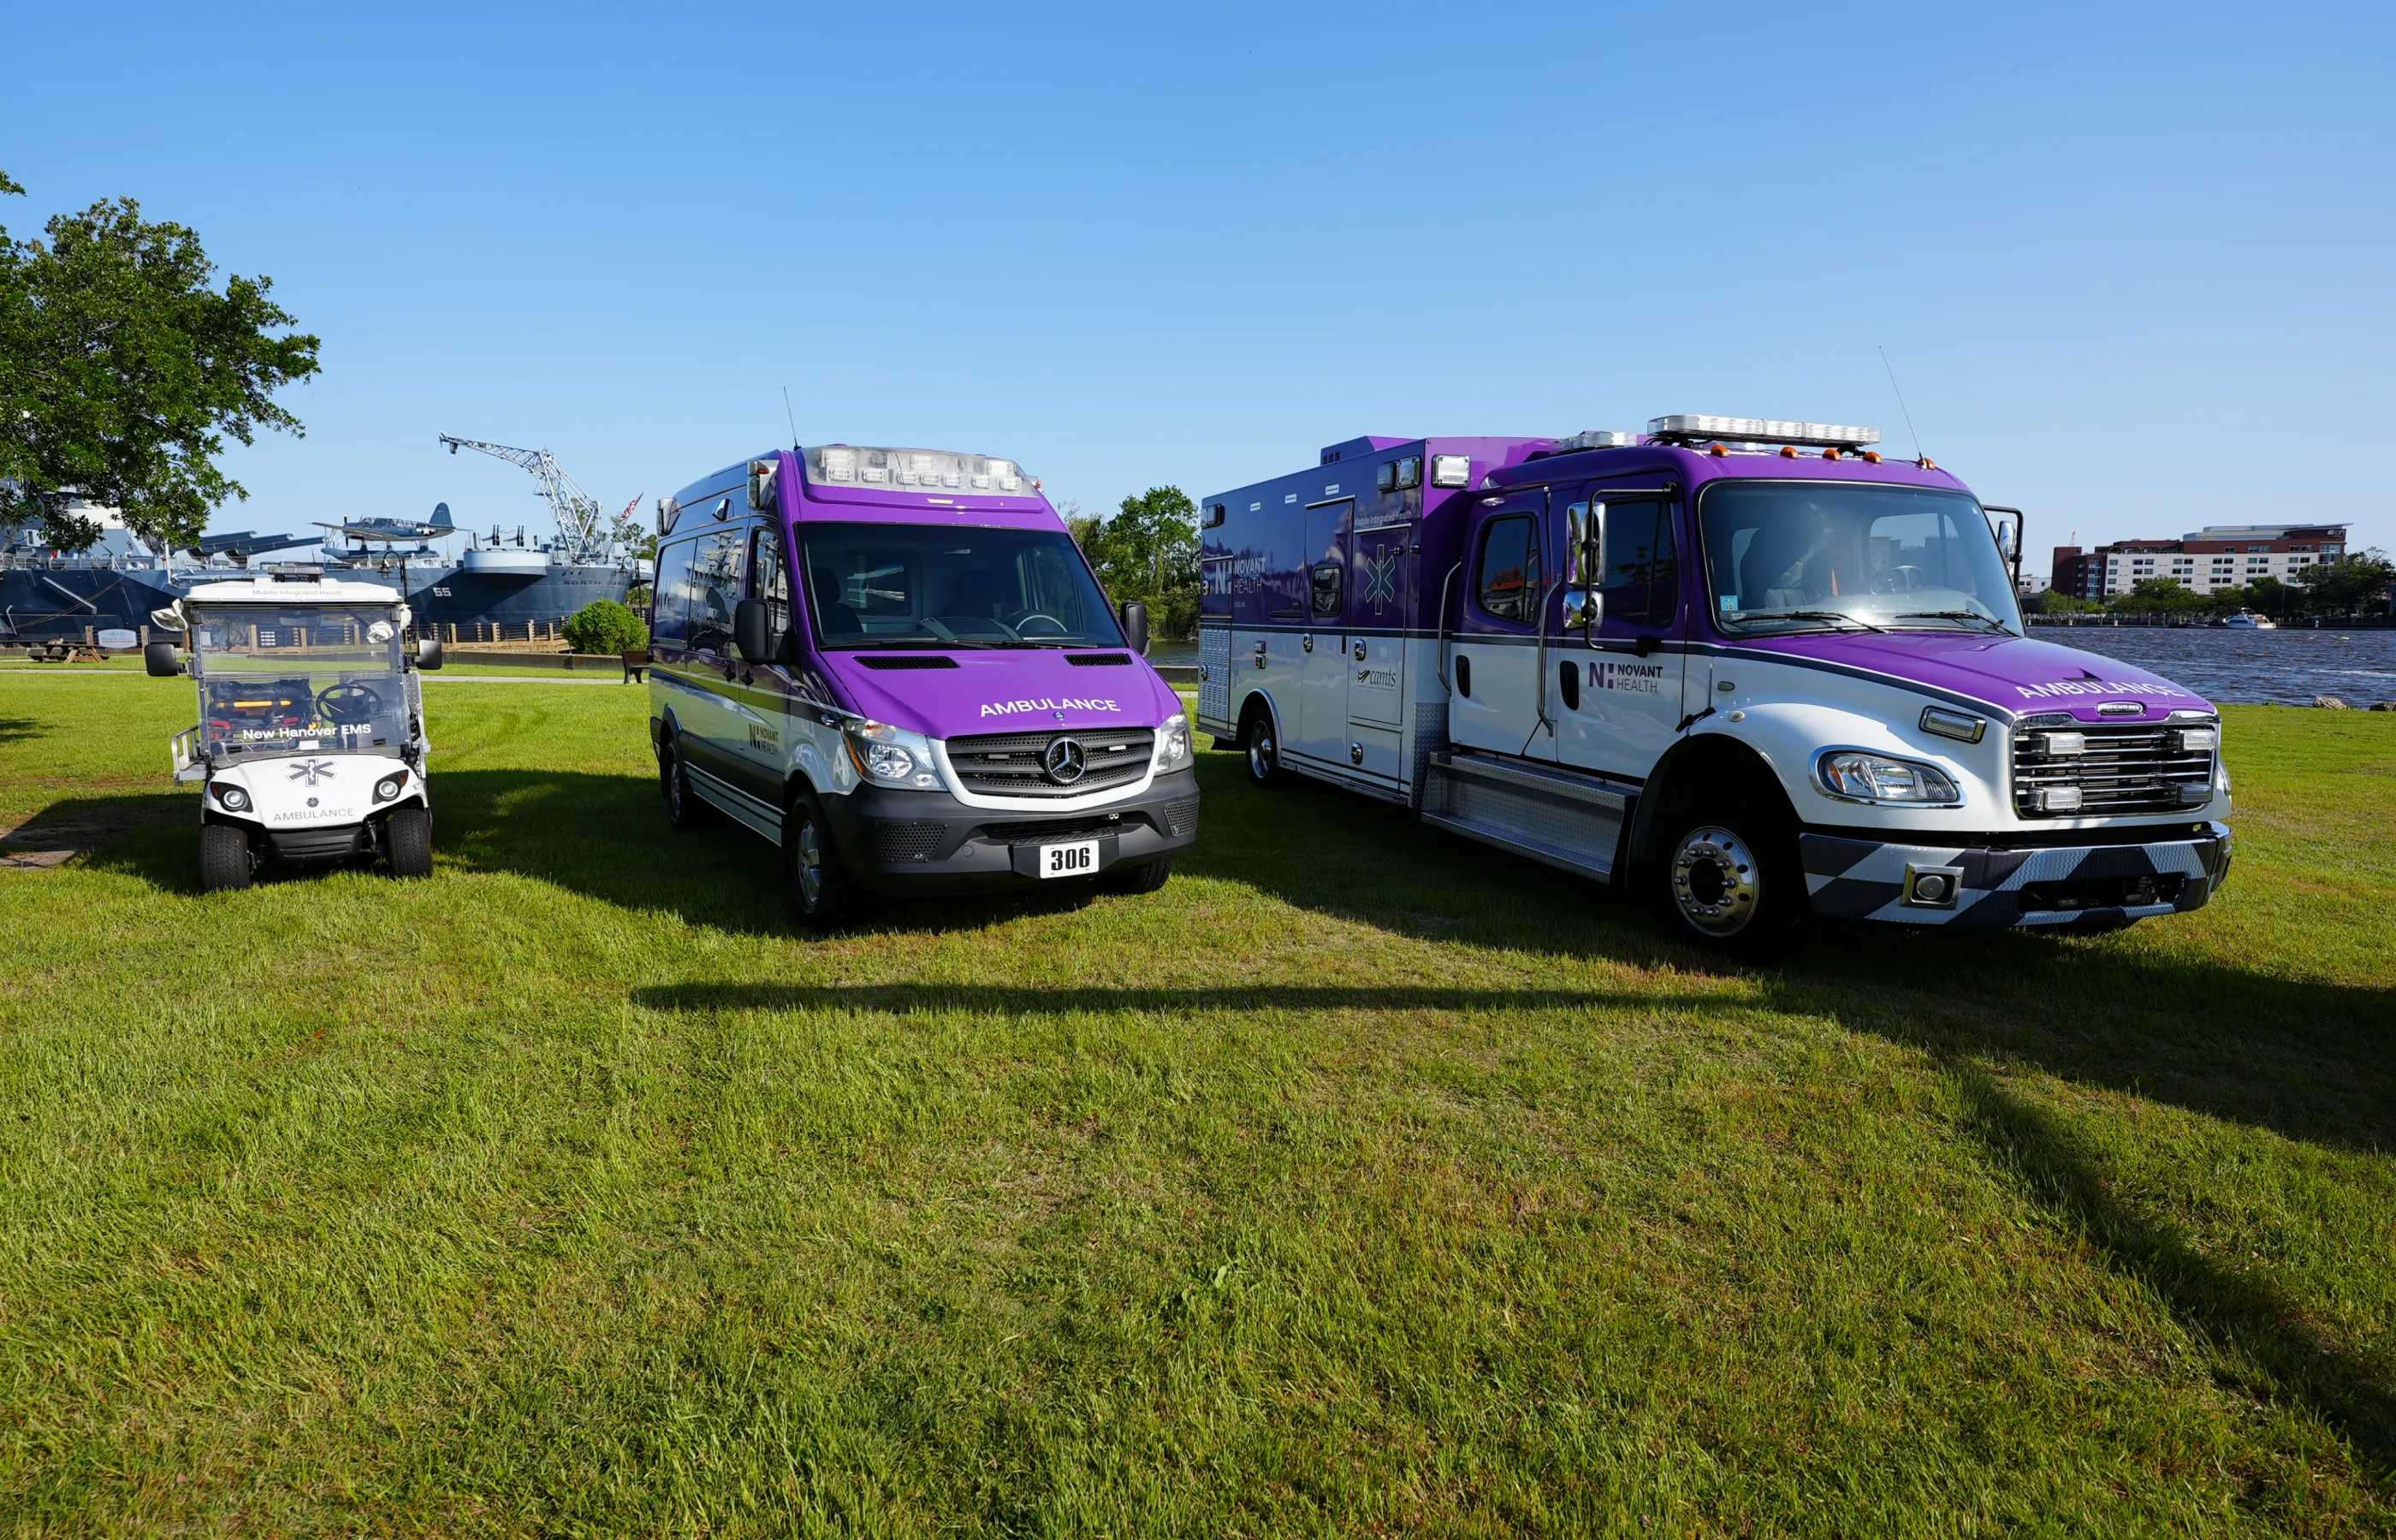 Novant Health critical ground transport vehicles